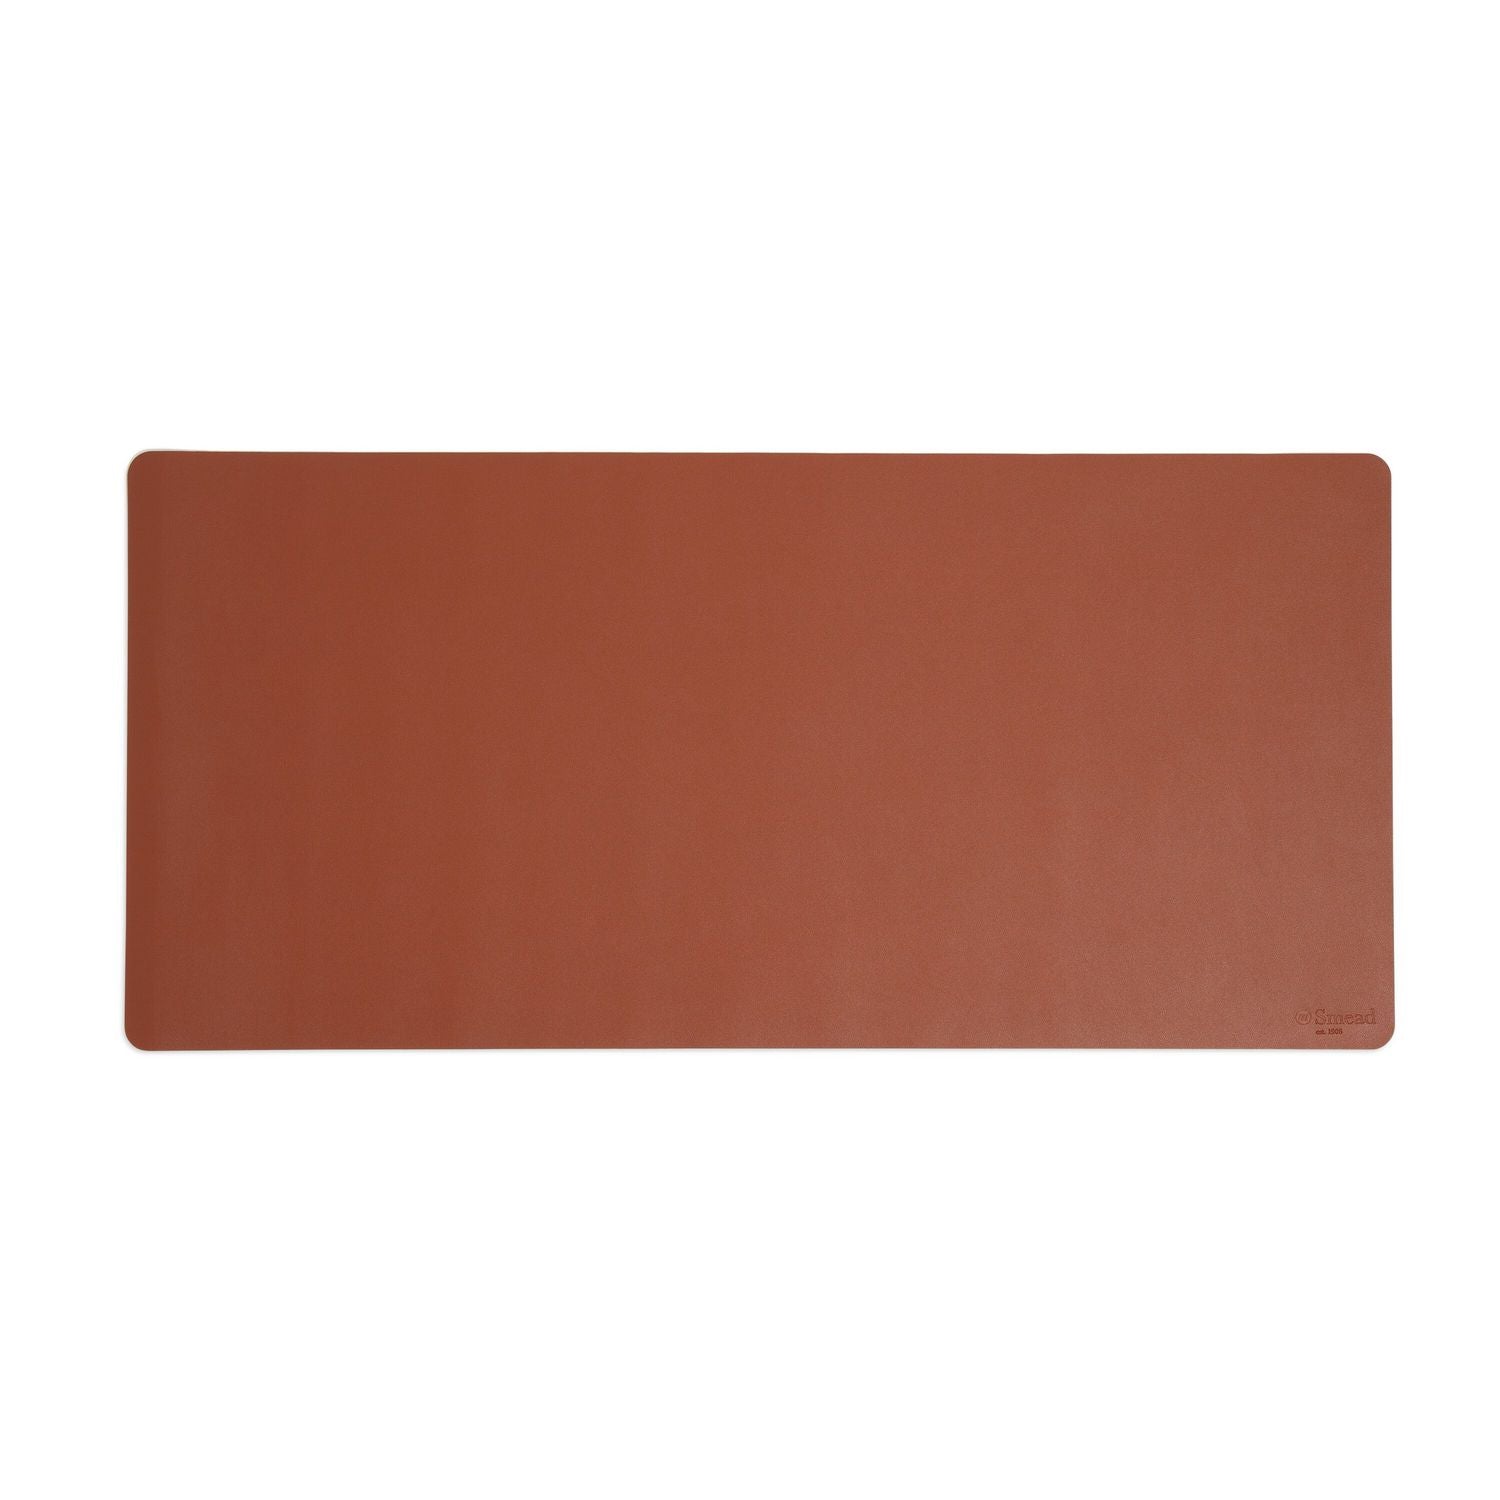 vegan-leather-desk-pads-36-x-17-brown_smd64827 - 1